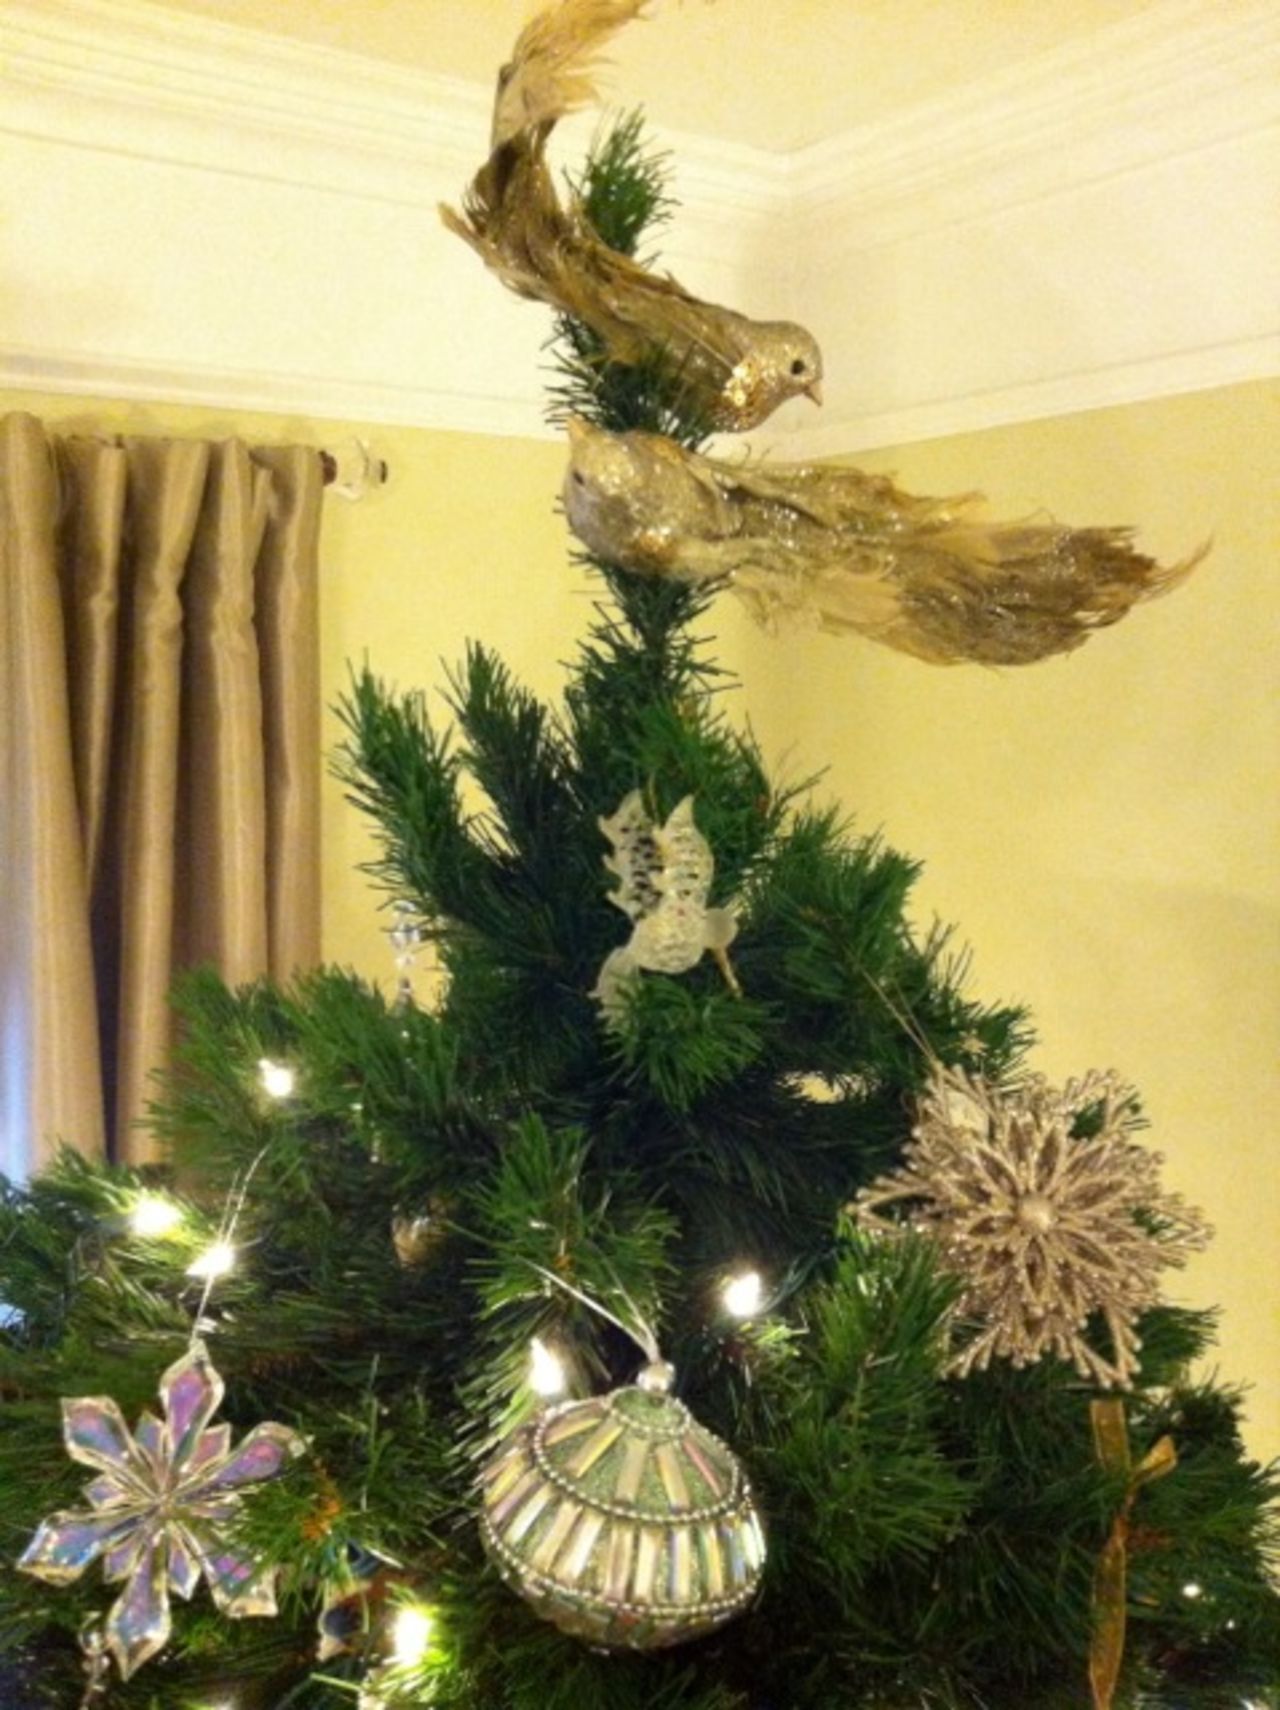 Fanciful peacocks top Norwood's Christmas tree.